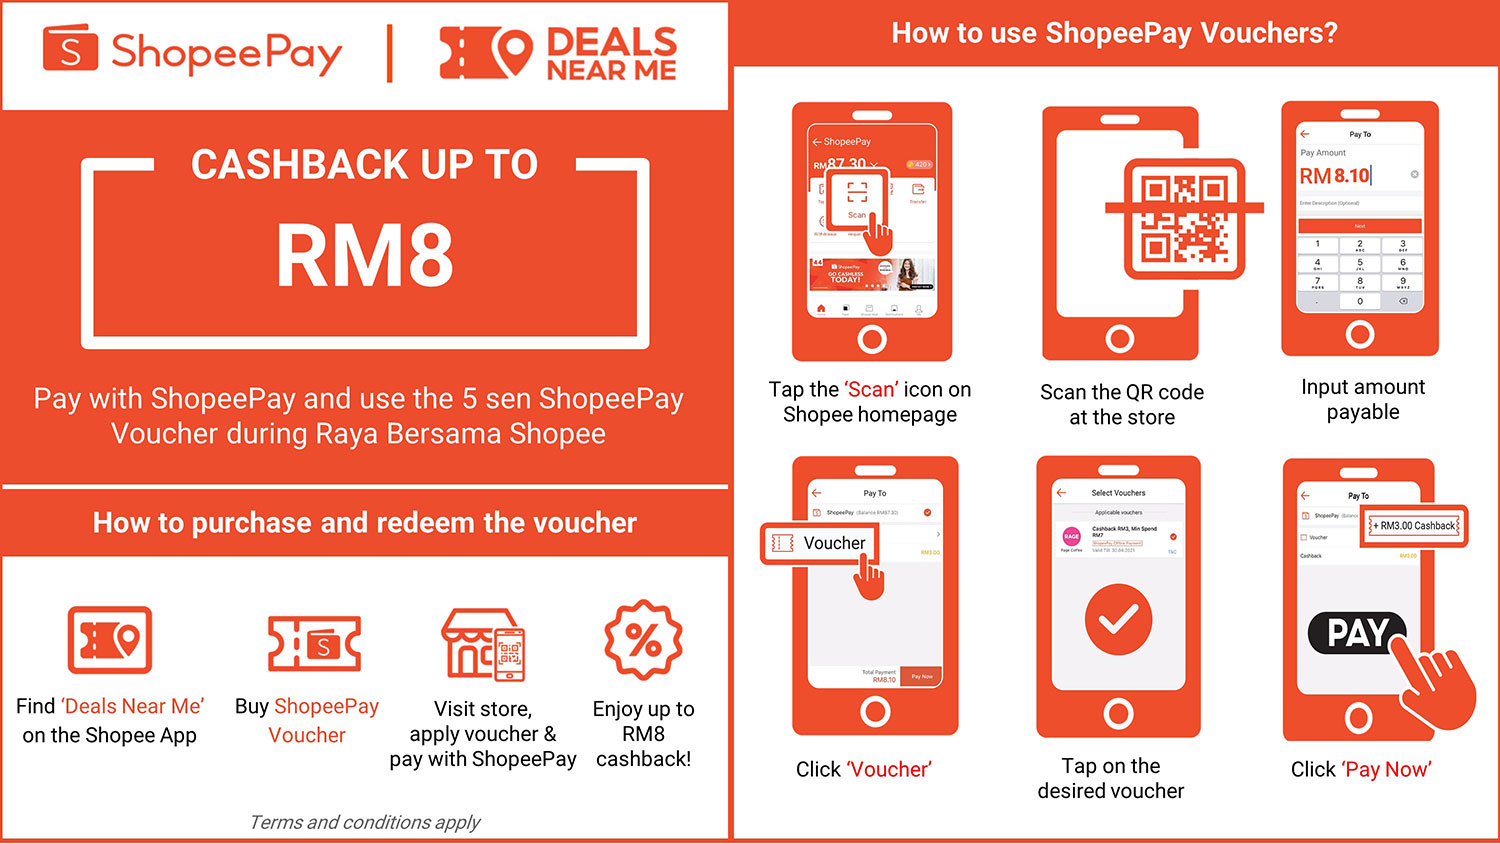 ShopeePay Introduces ‘Deals Near Me’ Feature